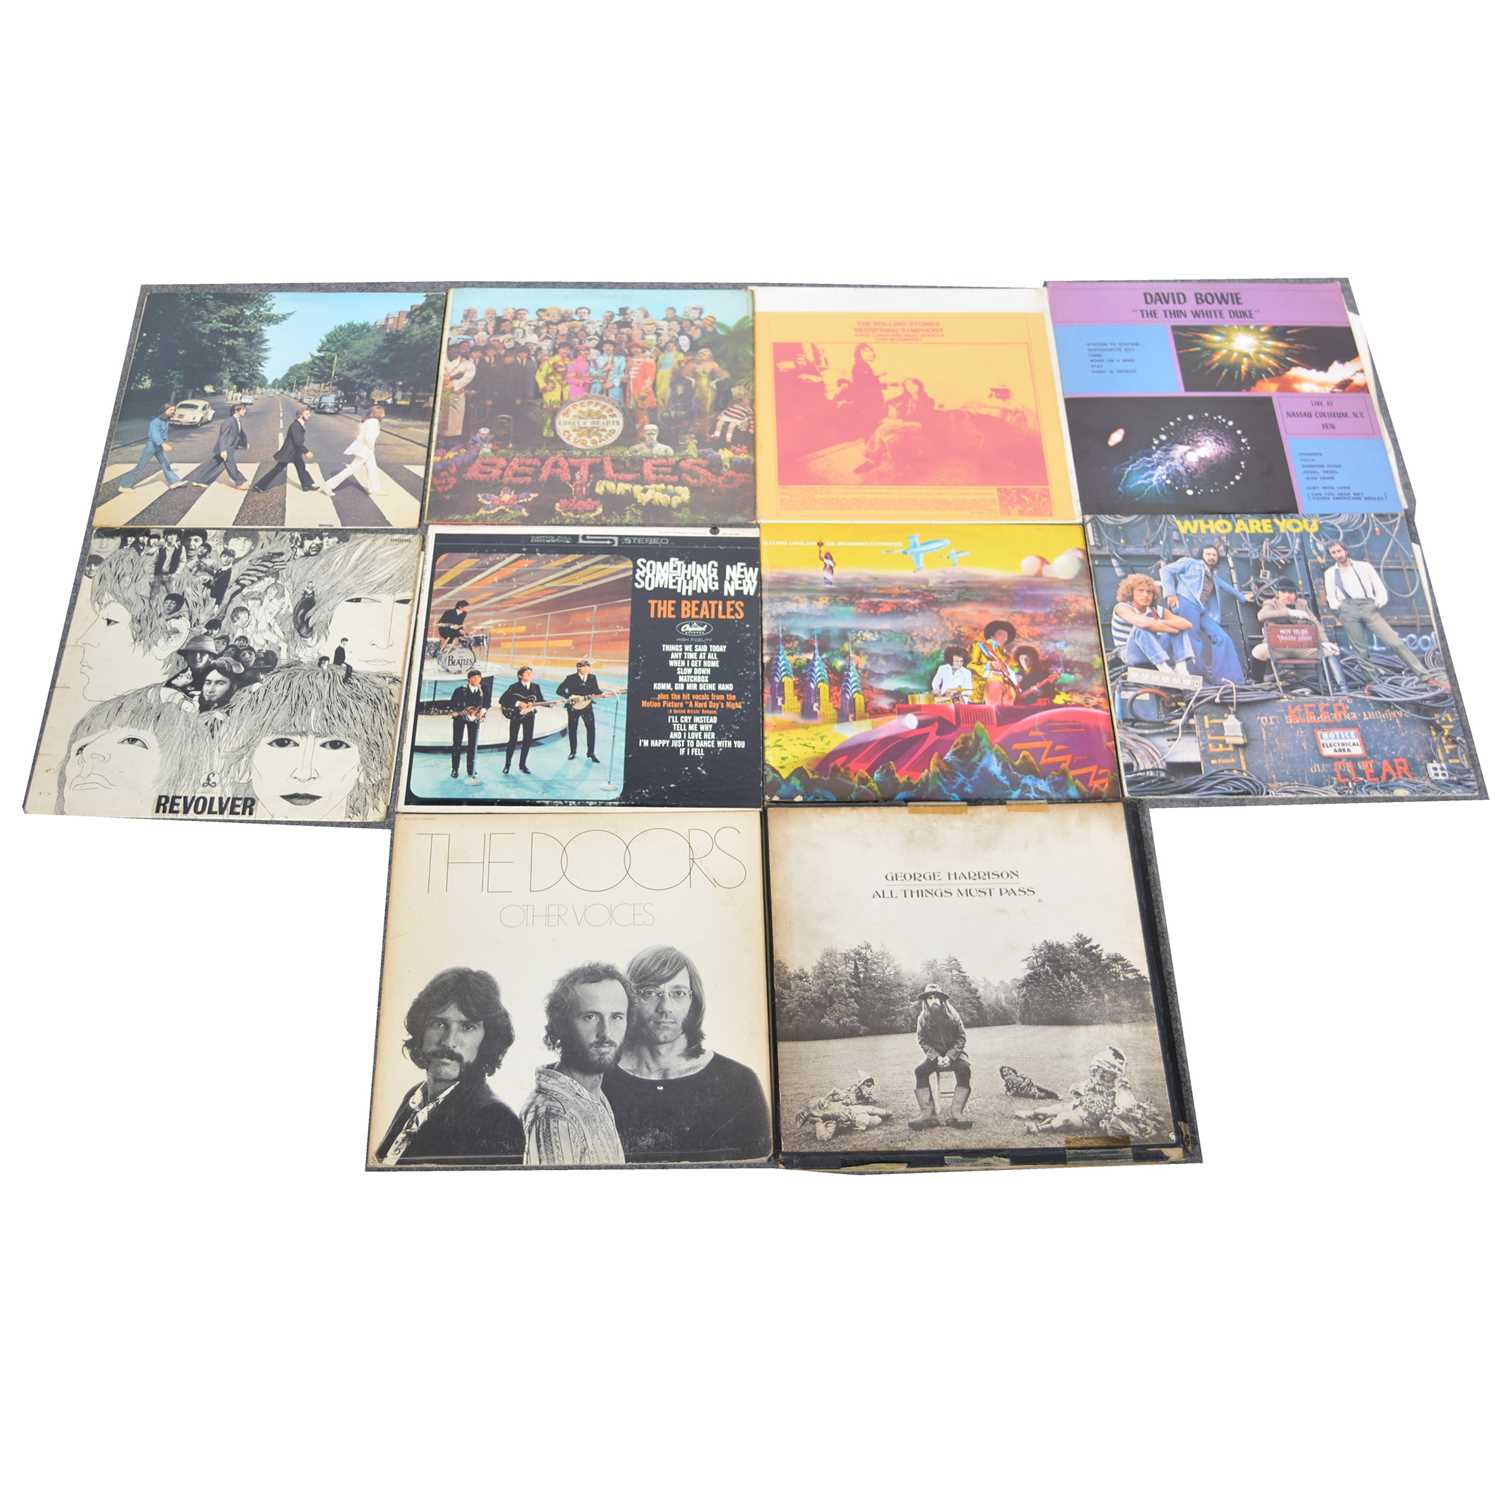 Lot 31 - Ten LP vinyl records; including The Beatles, David Bowie, The Doors, etc.